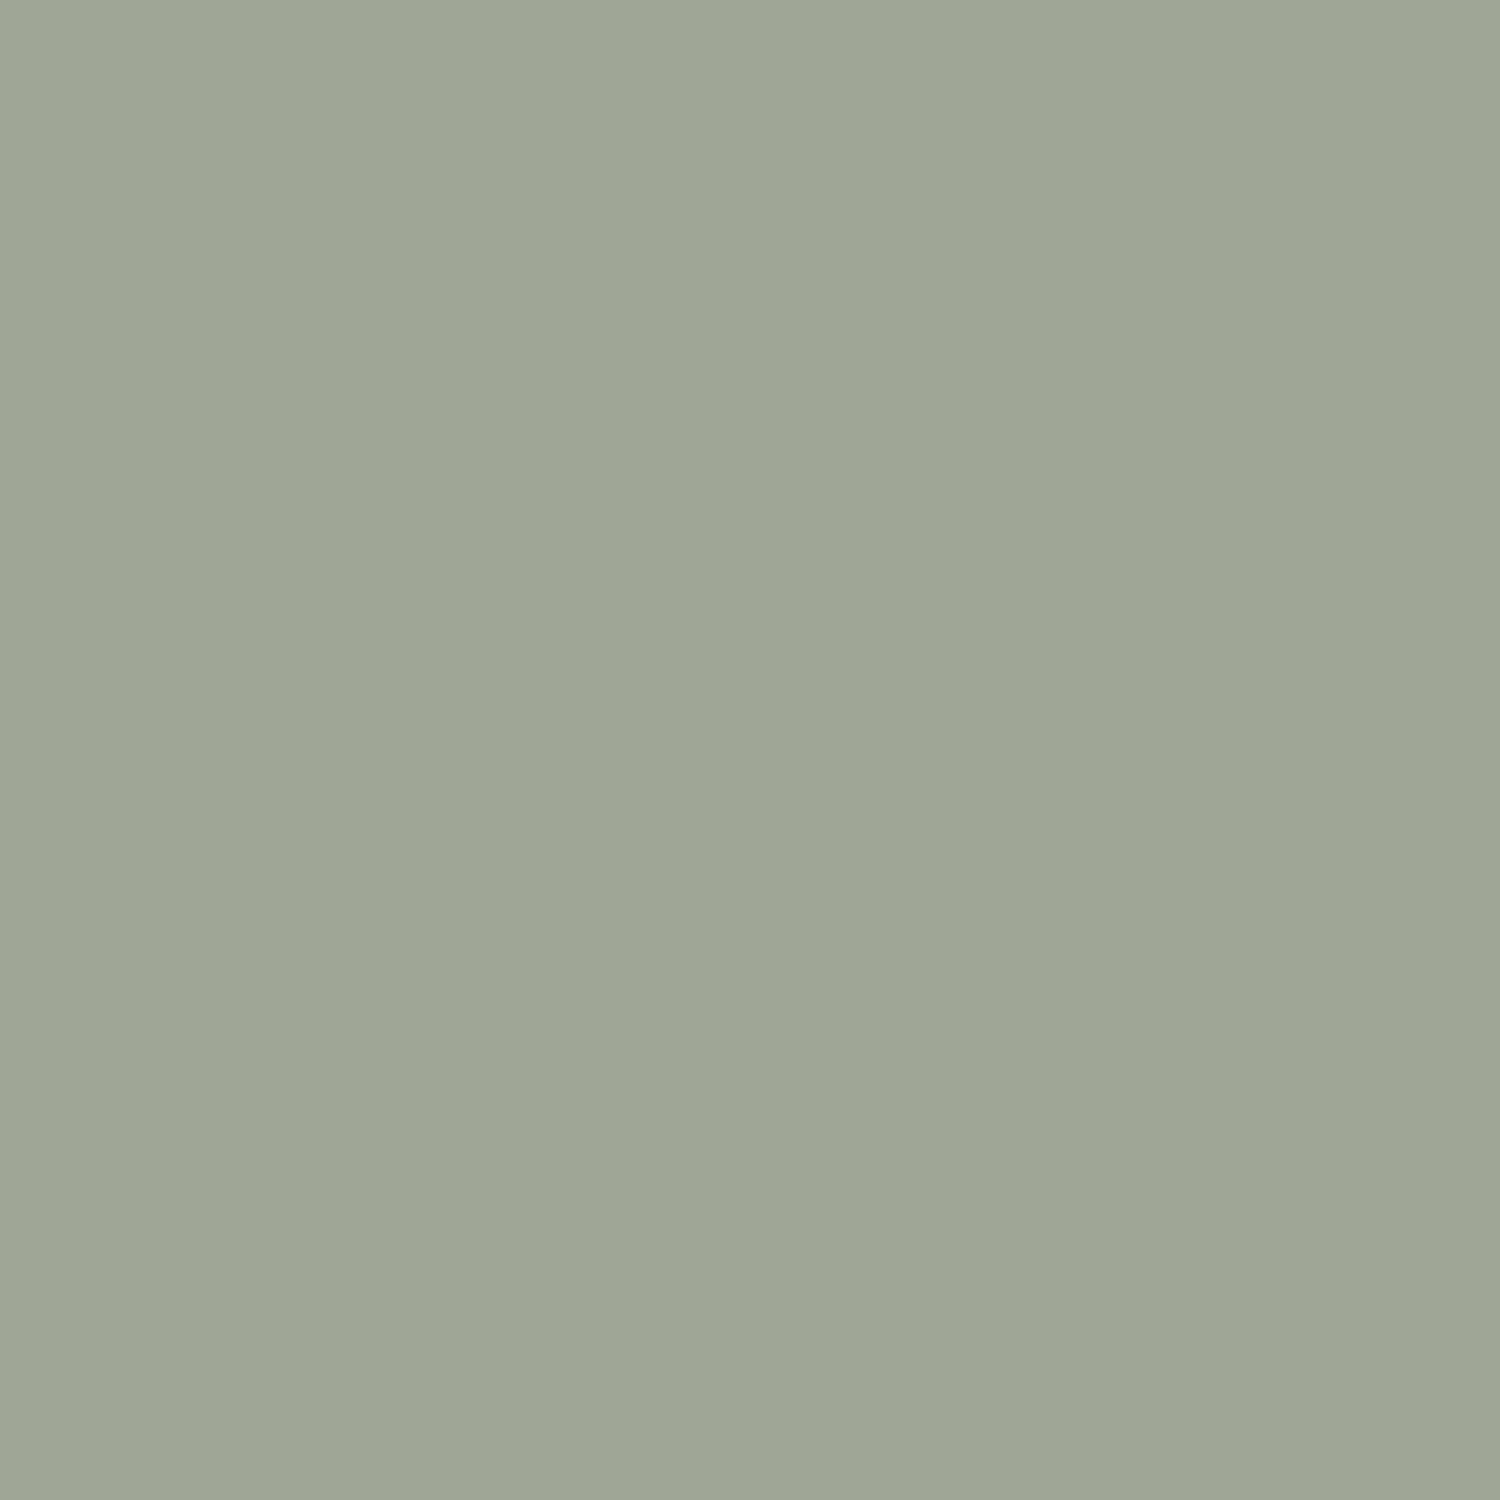 Saugstarkes Kiesel grau Handtuchset Waschhandschuh 4-tlg), Lashuma London 16x21 (Set, cm Grau